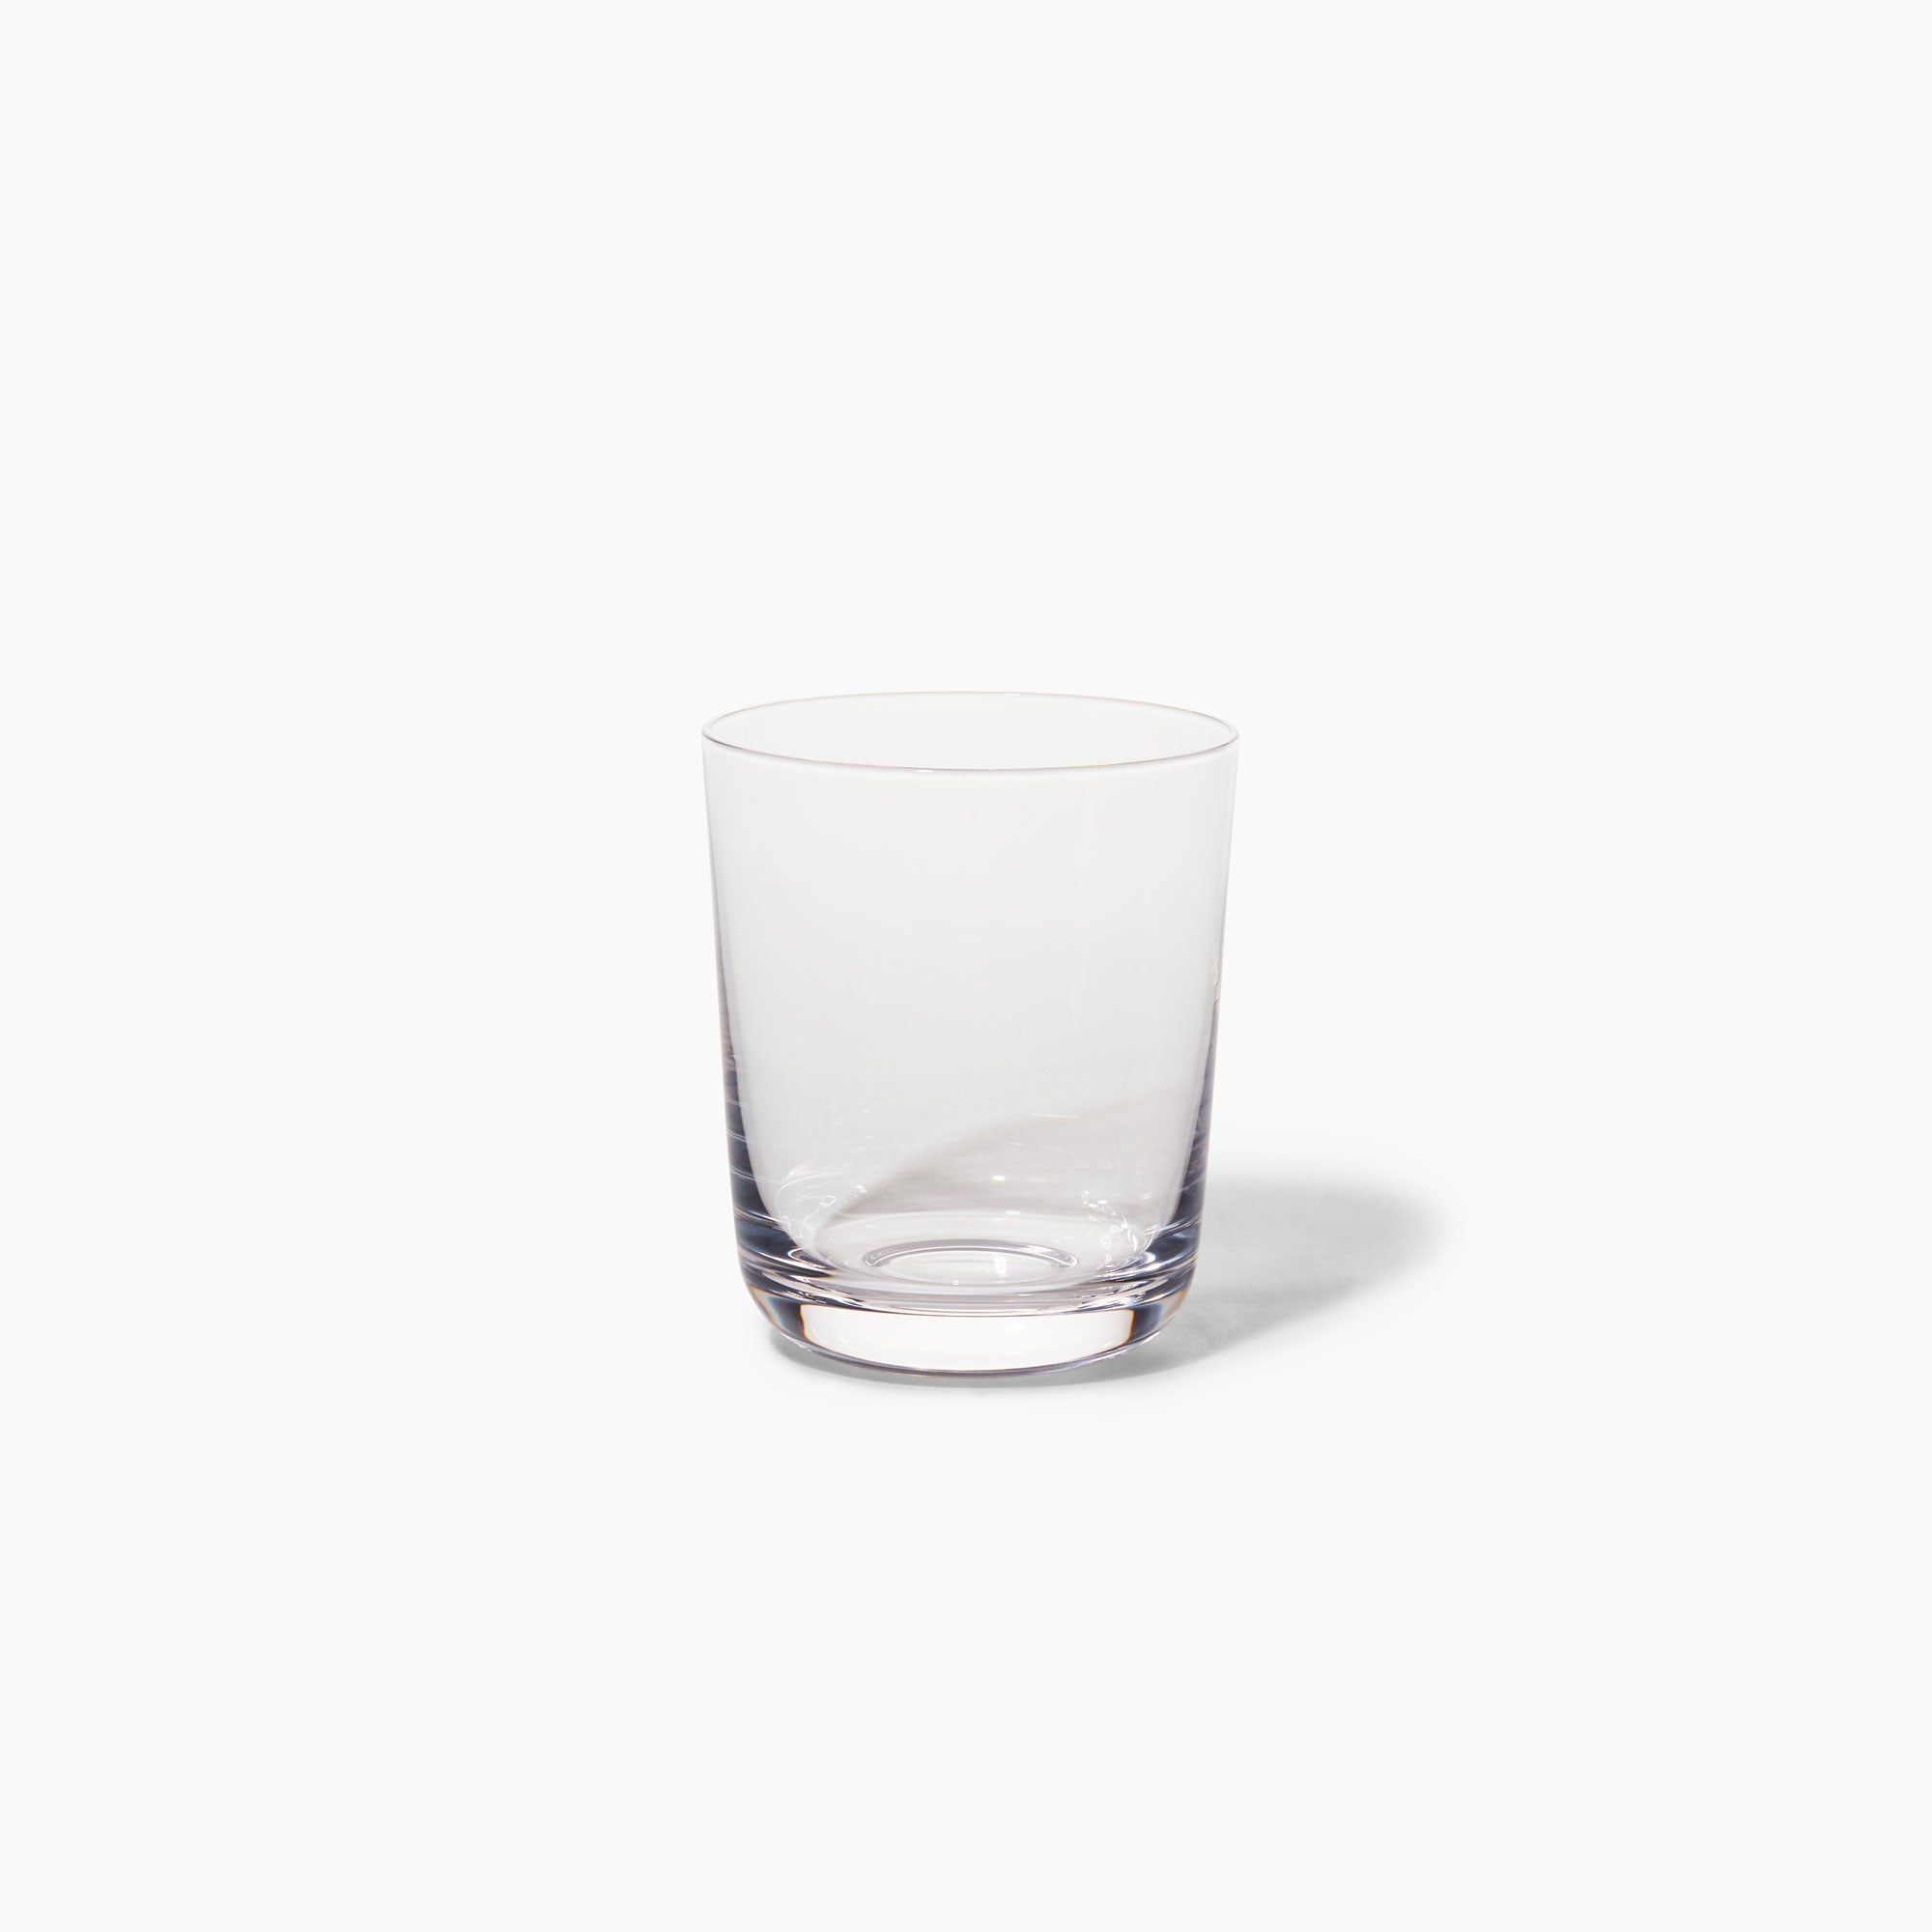 Leeway Glass - Set of 4